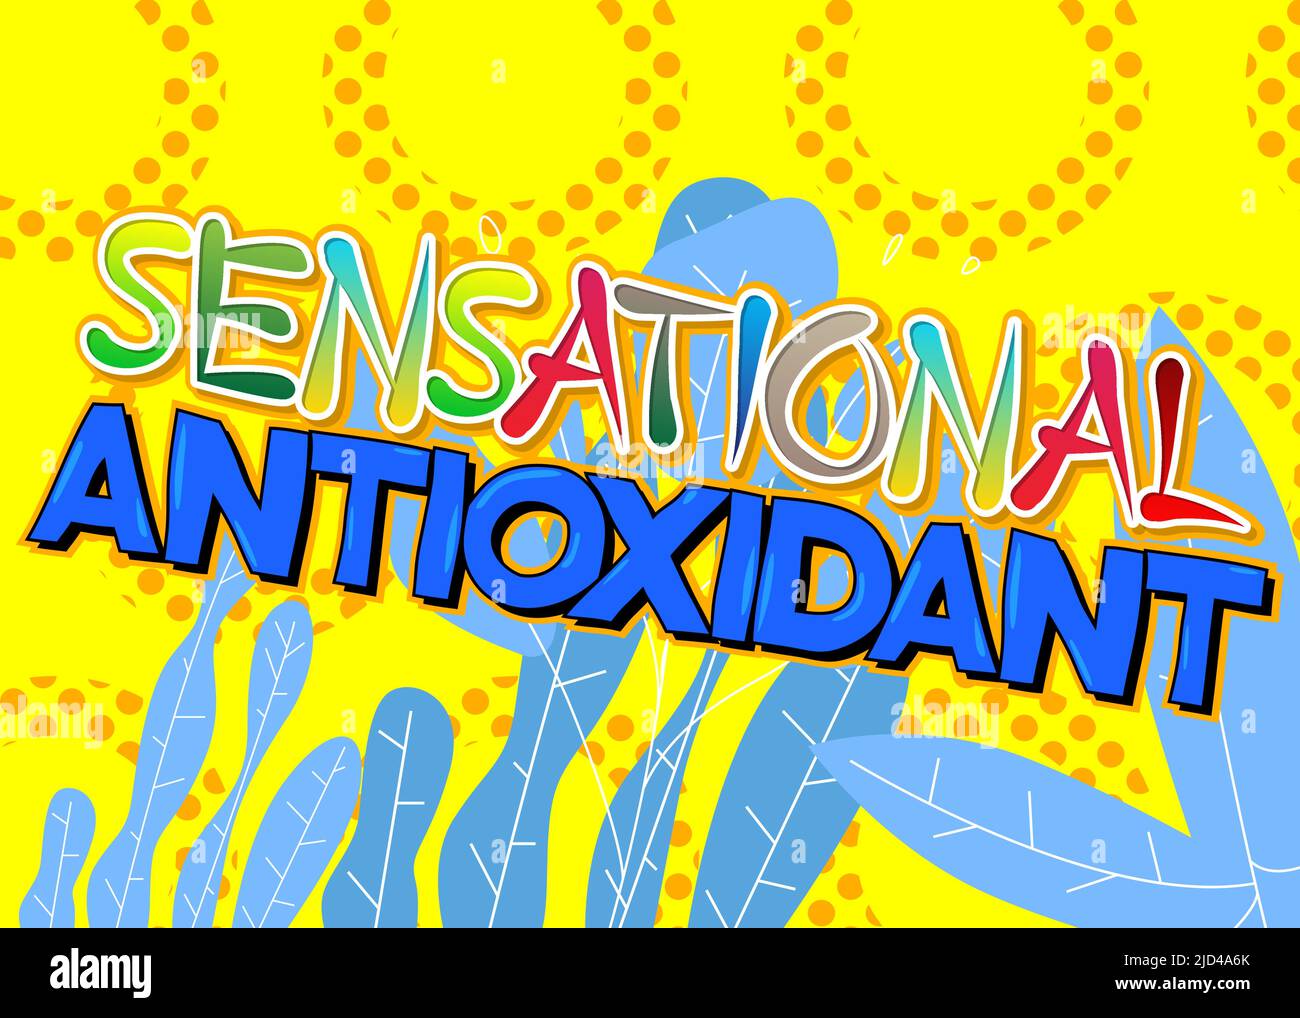 Sensational Antioxidant. Word written with Children's font in cartoon style. Stock Vector